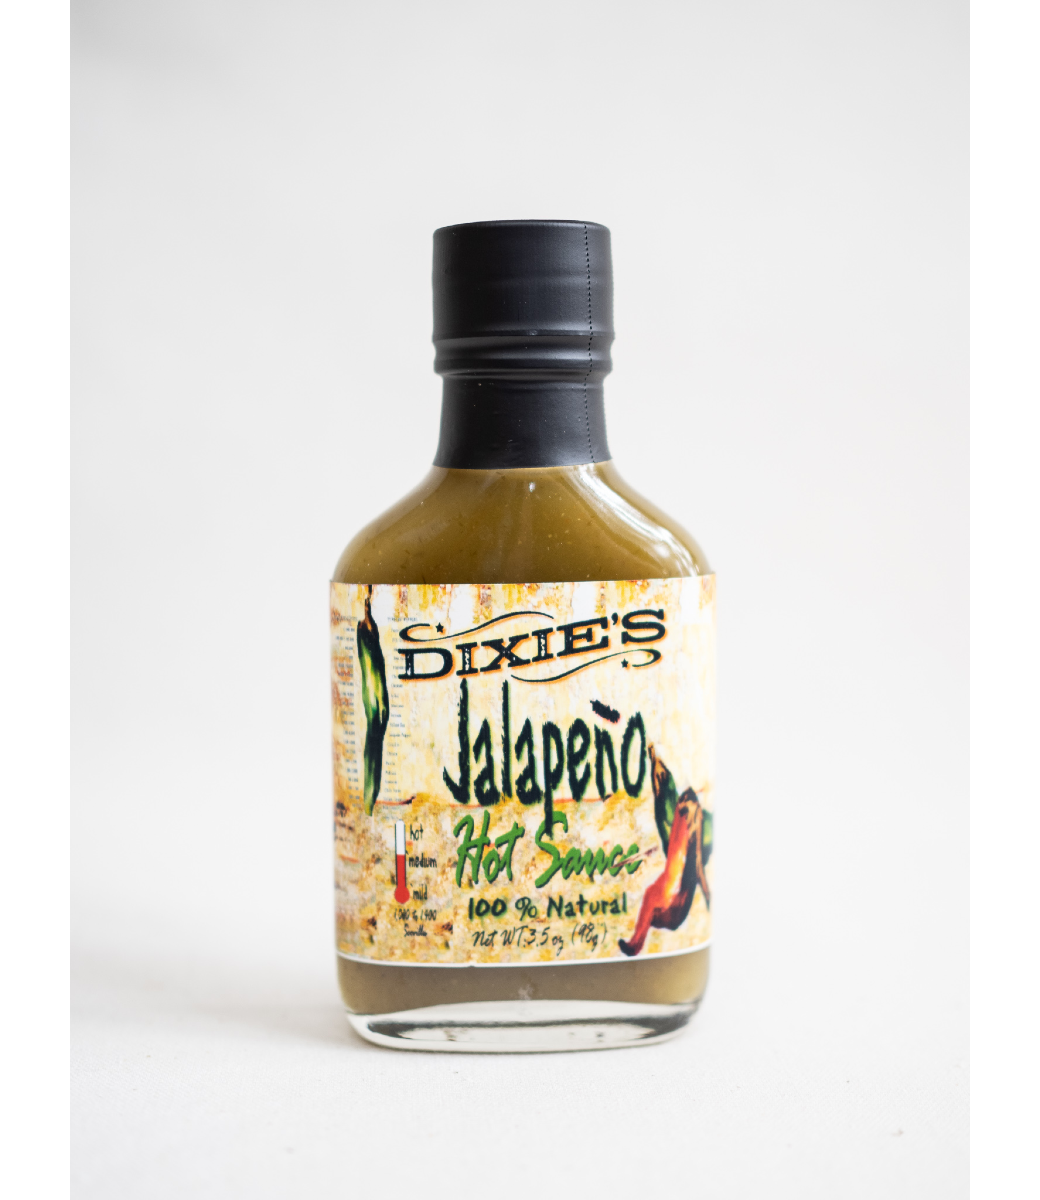 Dixie's Jalapeno Hot Sauce